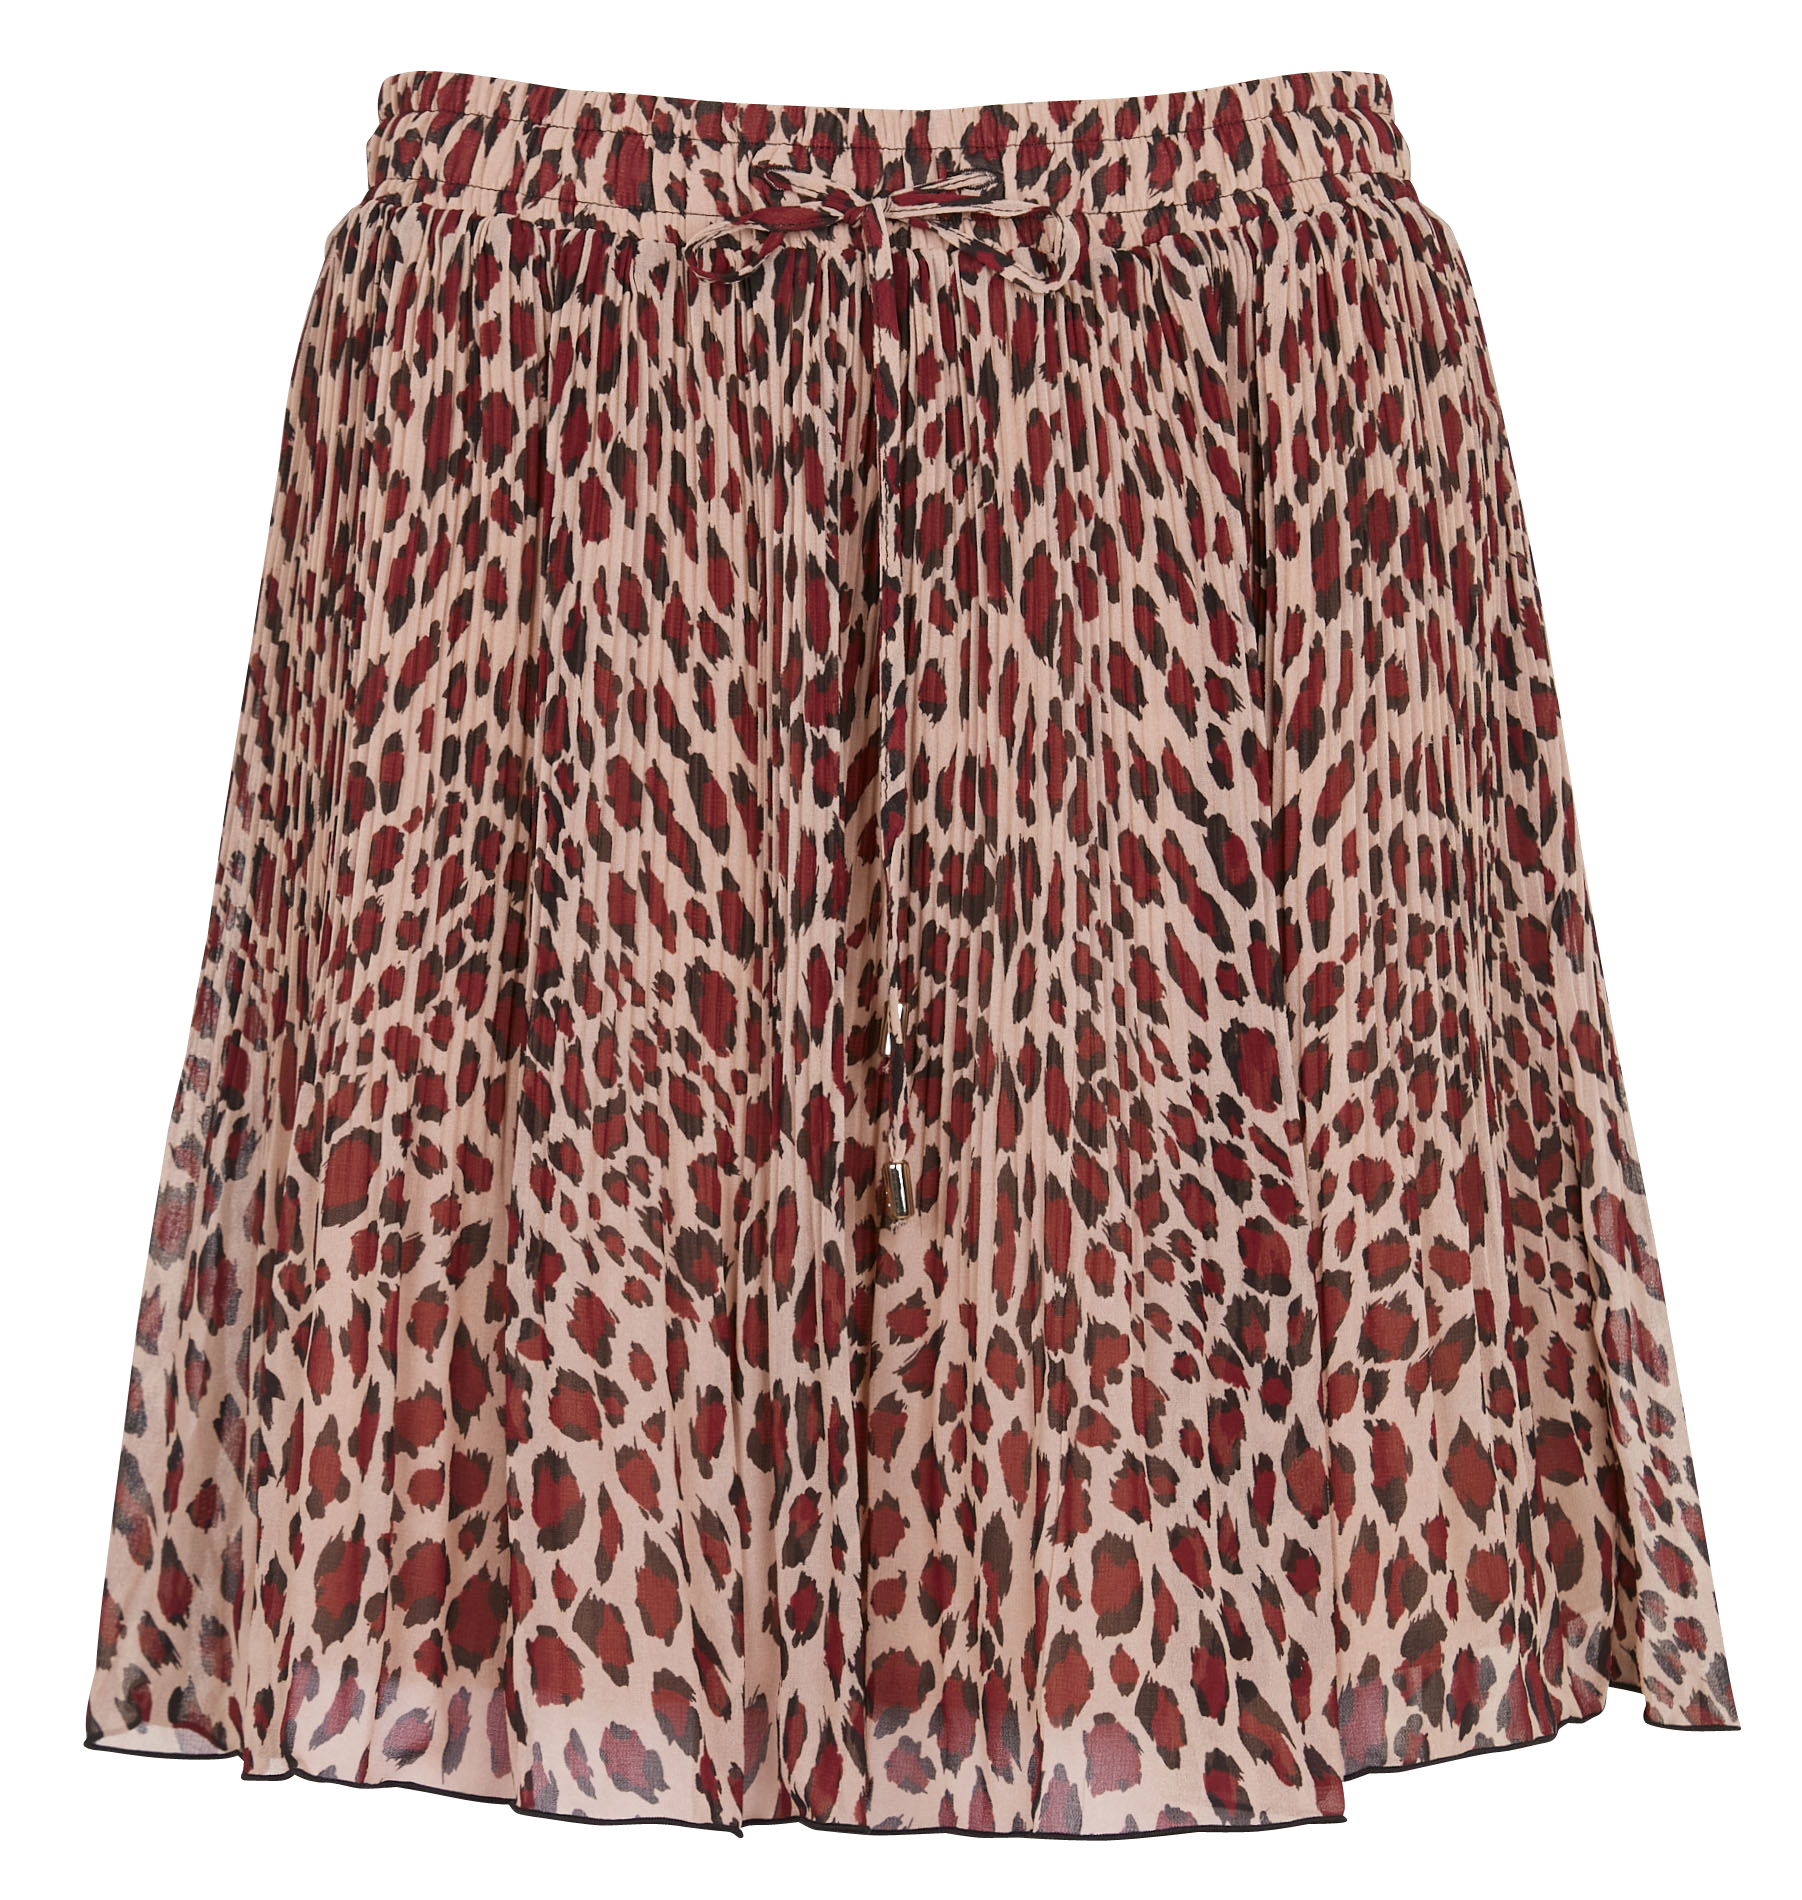 leopard print skirt short